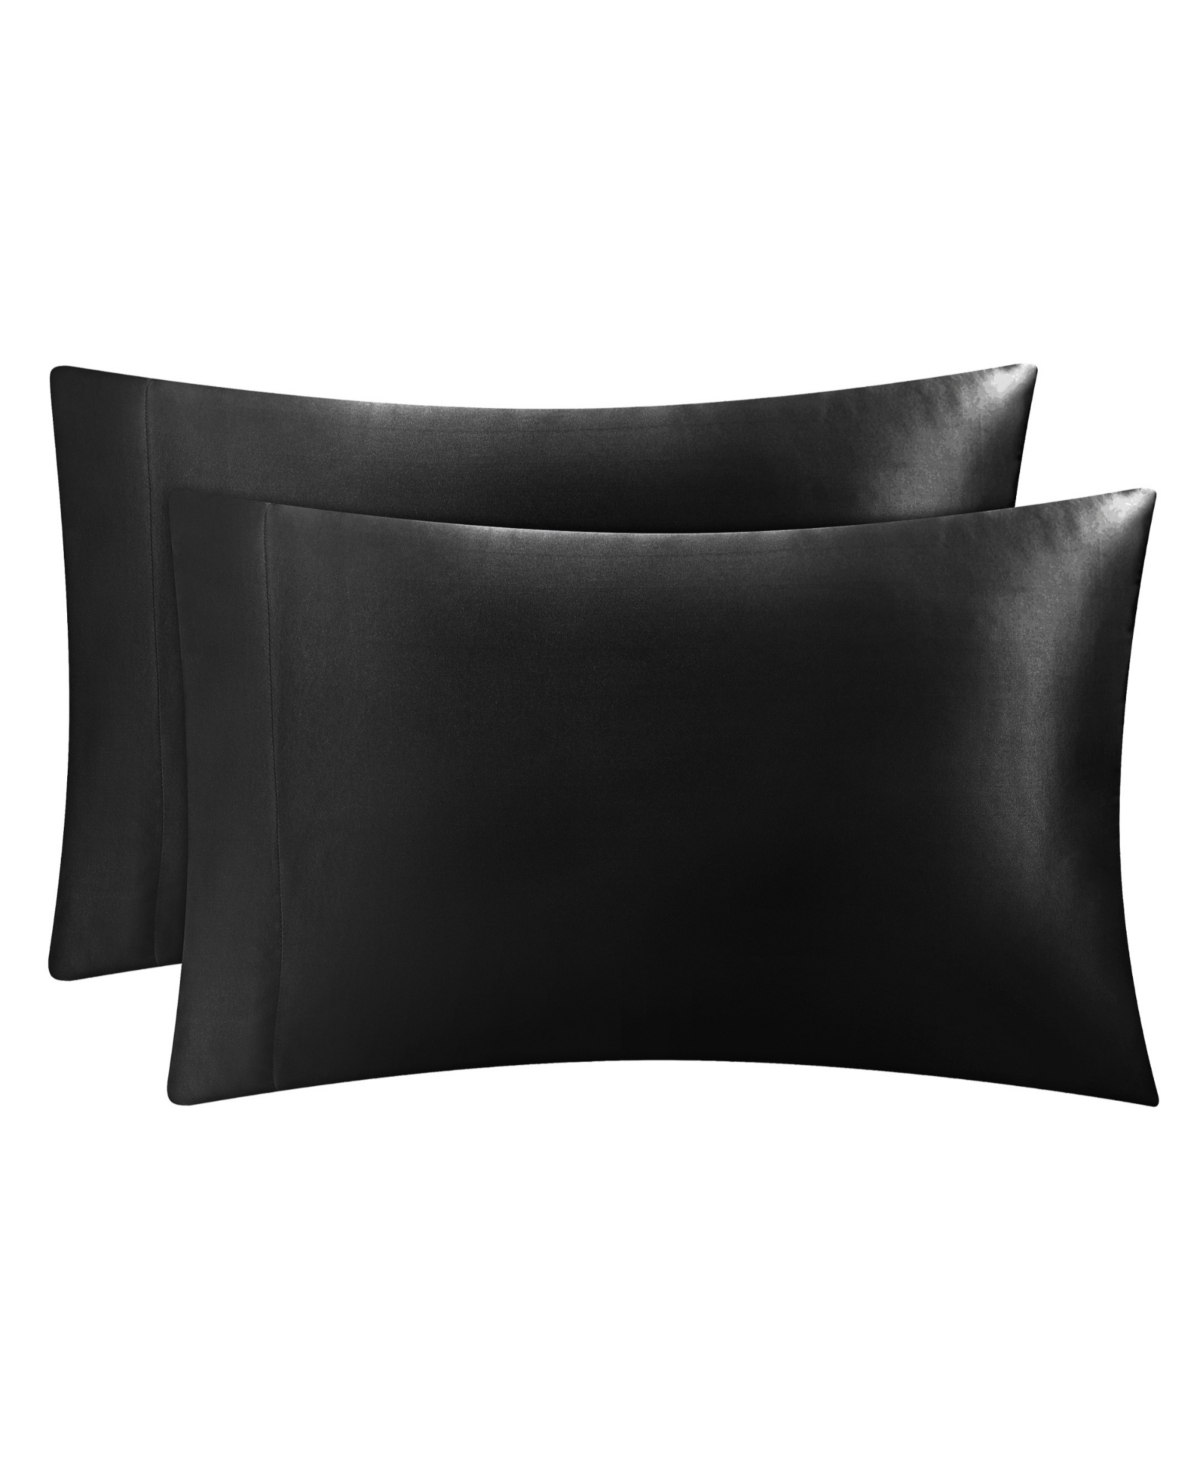 Juicy Couture Satin 2 Piece Pillow Case Set, Queen In Black